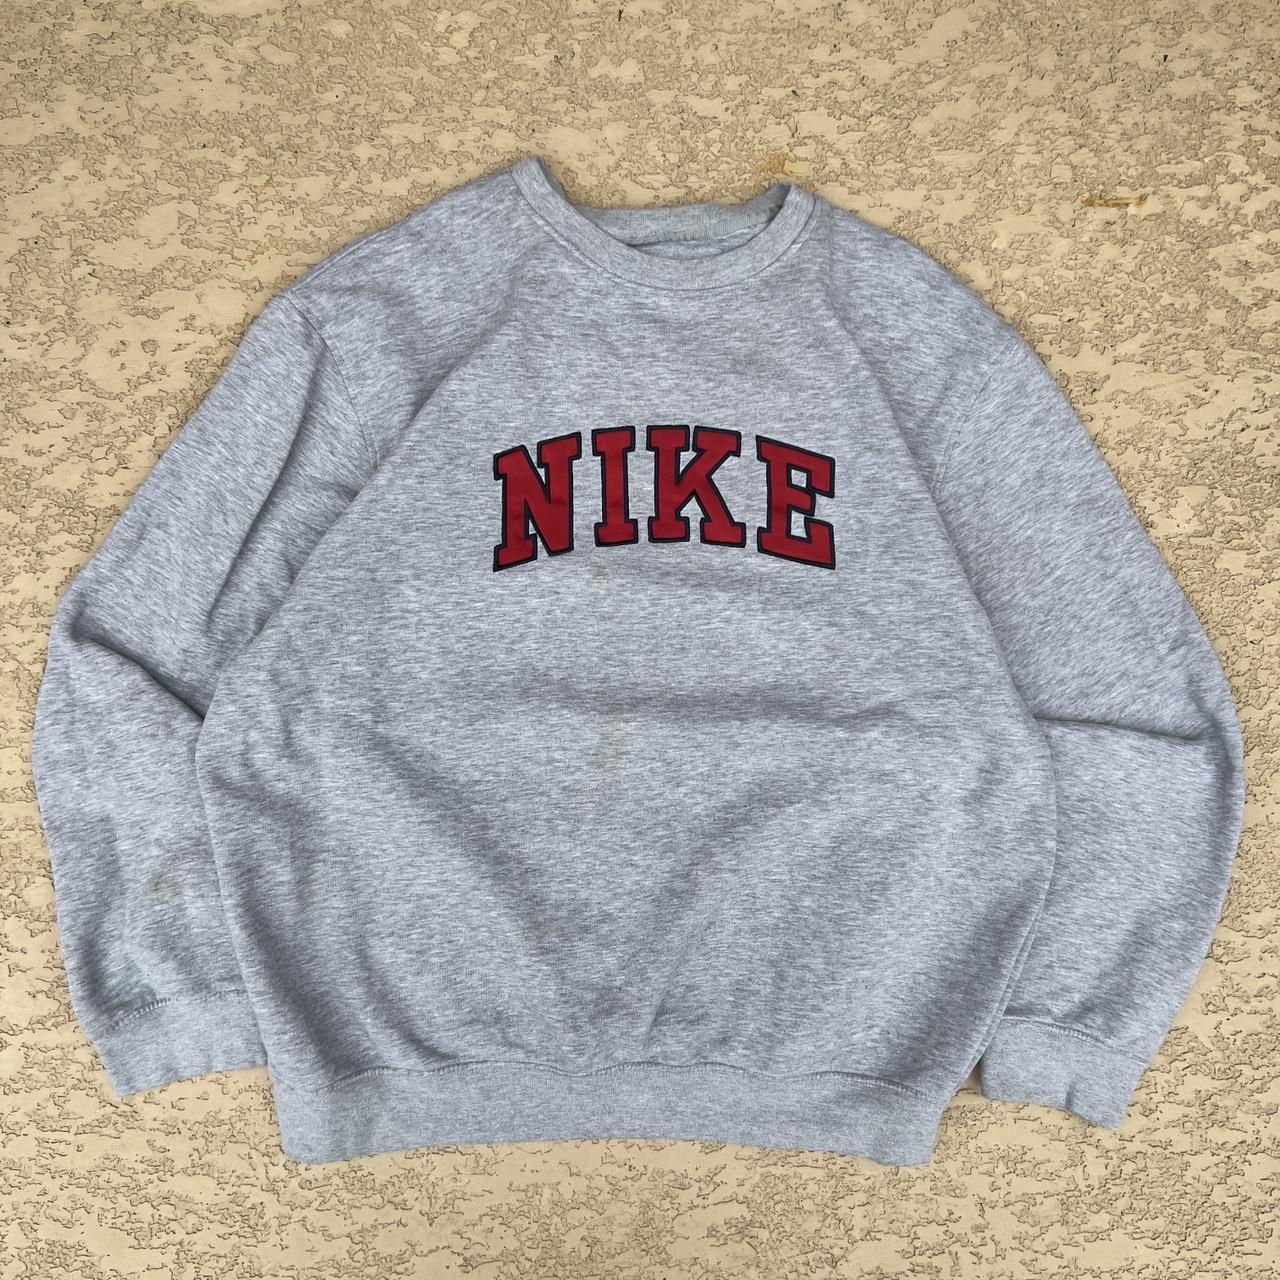 Nike Men's Grey and Red Sweatshirt | Depop